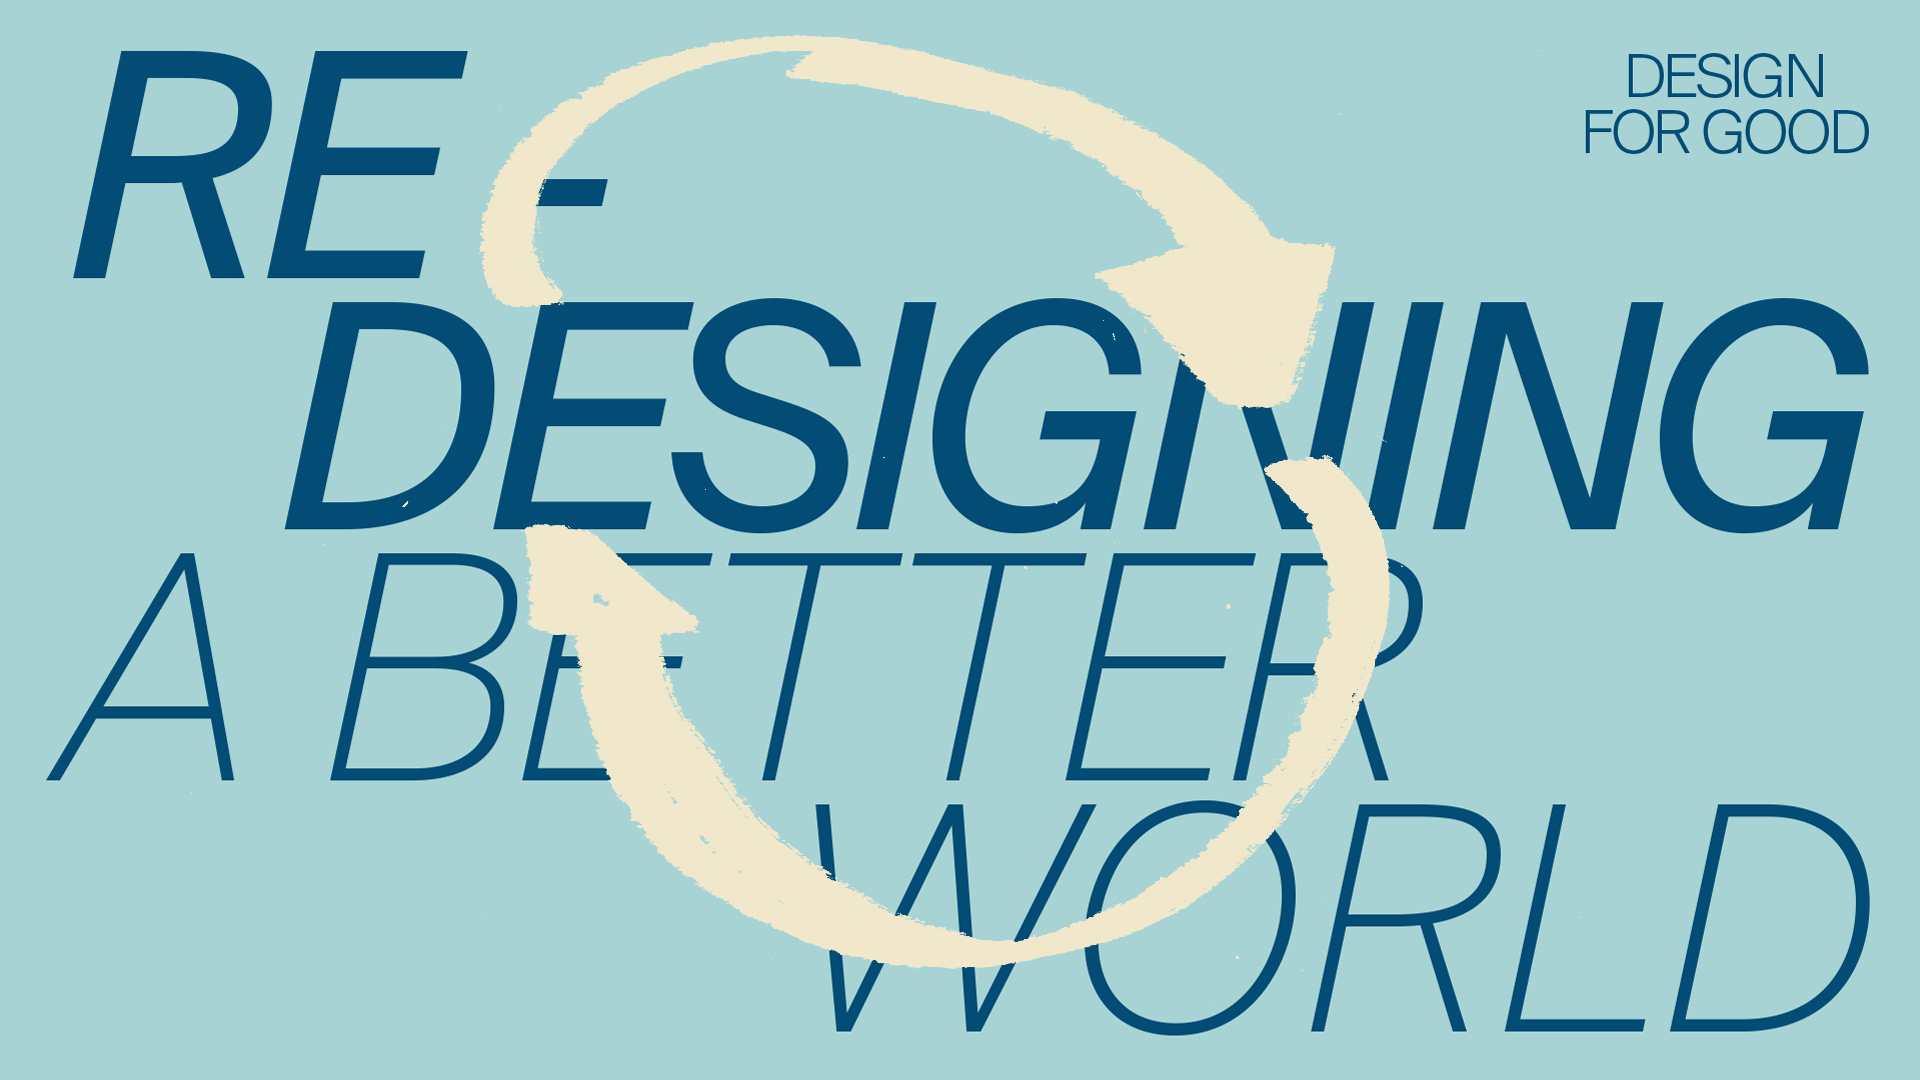 Design for good: Re-designing a better world